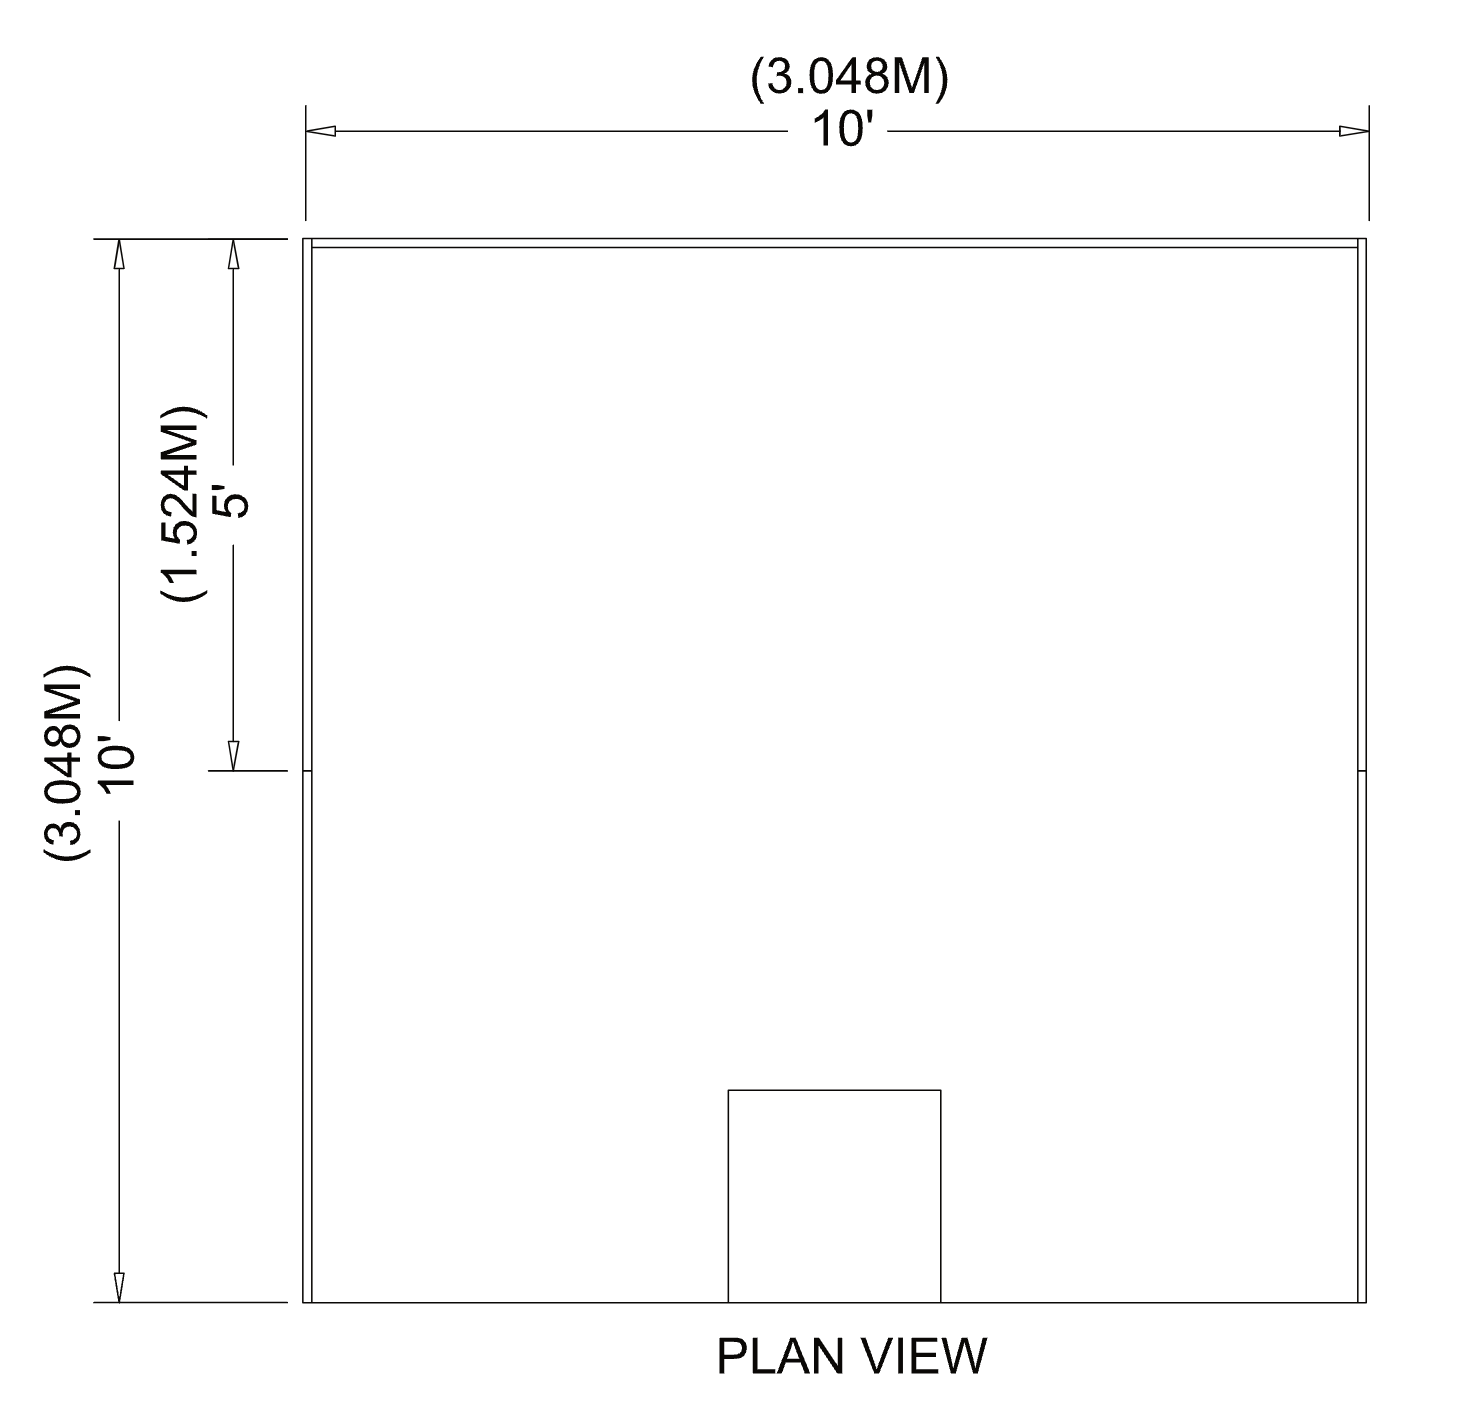 Perimeter Booth Plan View